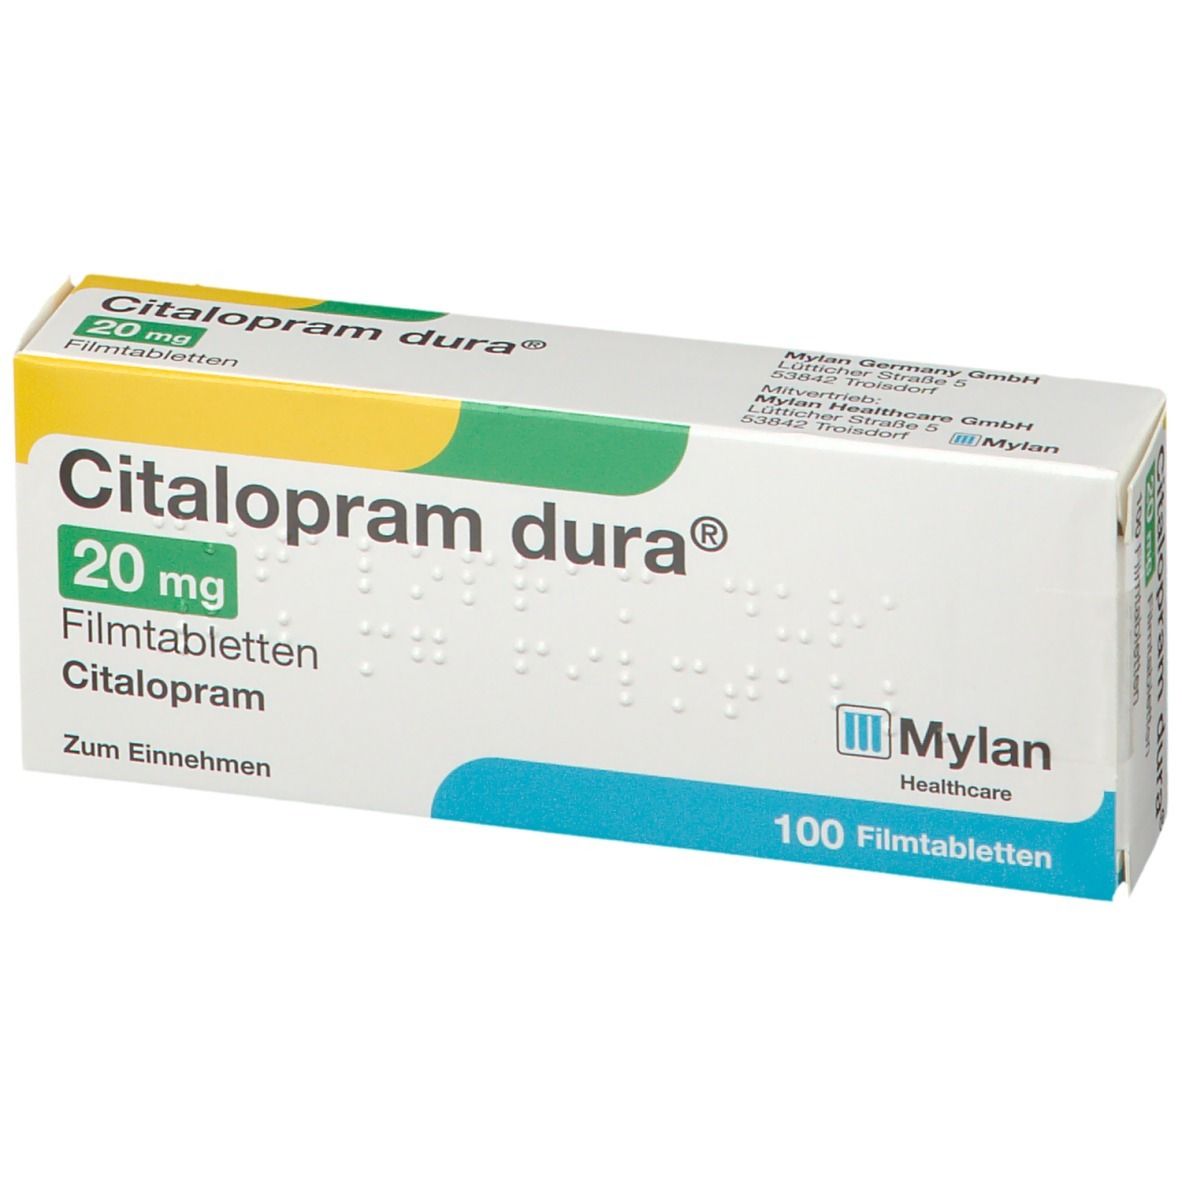 Citalopram dura® 20 mg